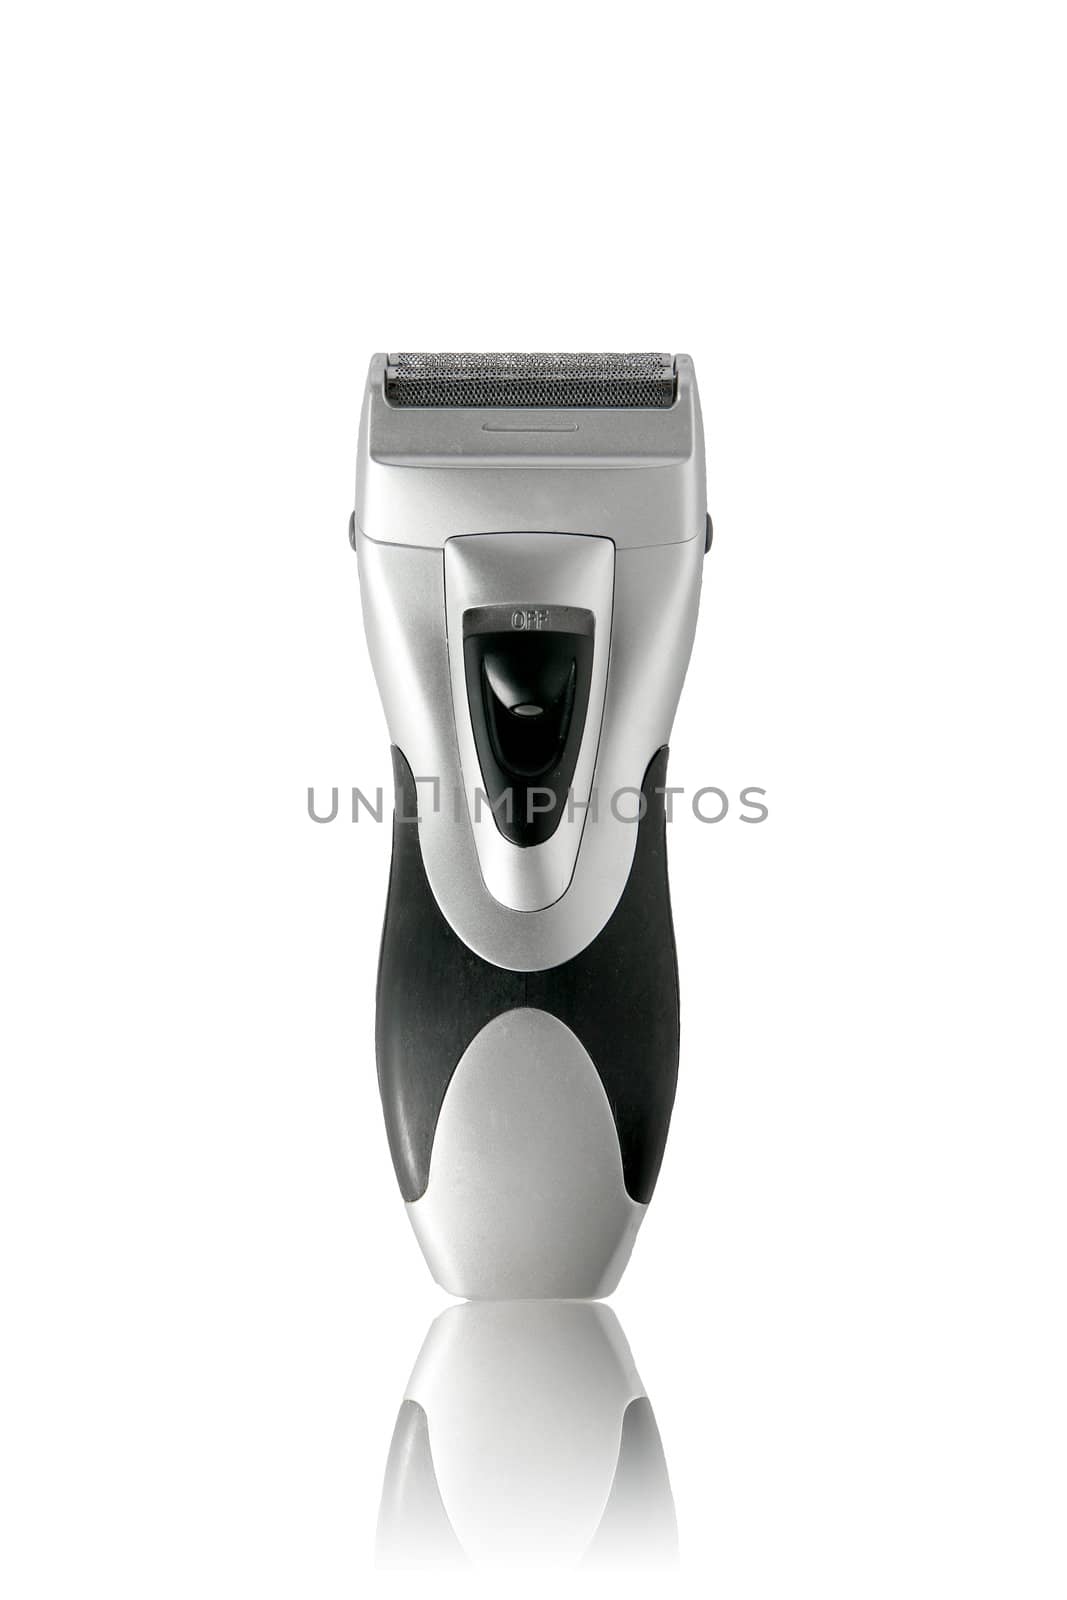 Electric razor for shaving and hair dressing men.